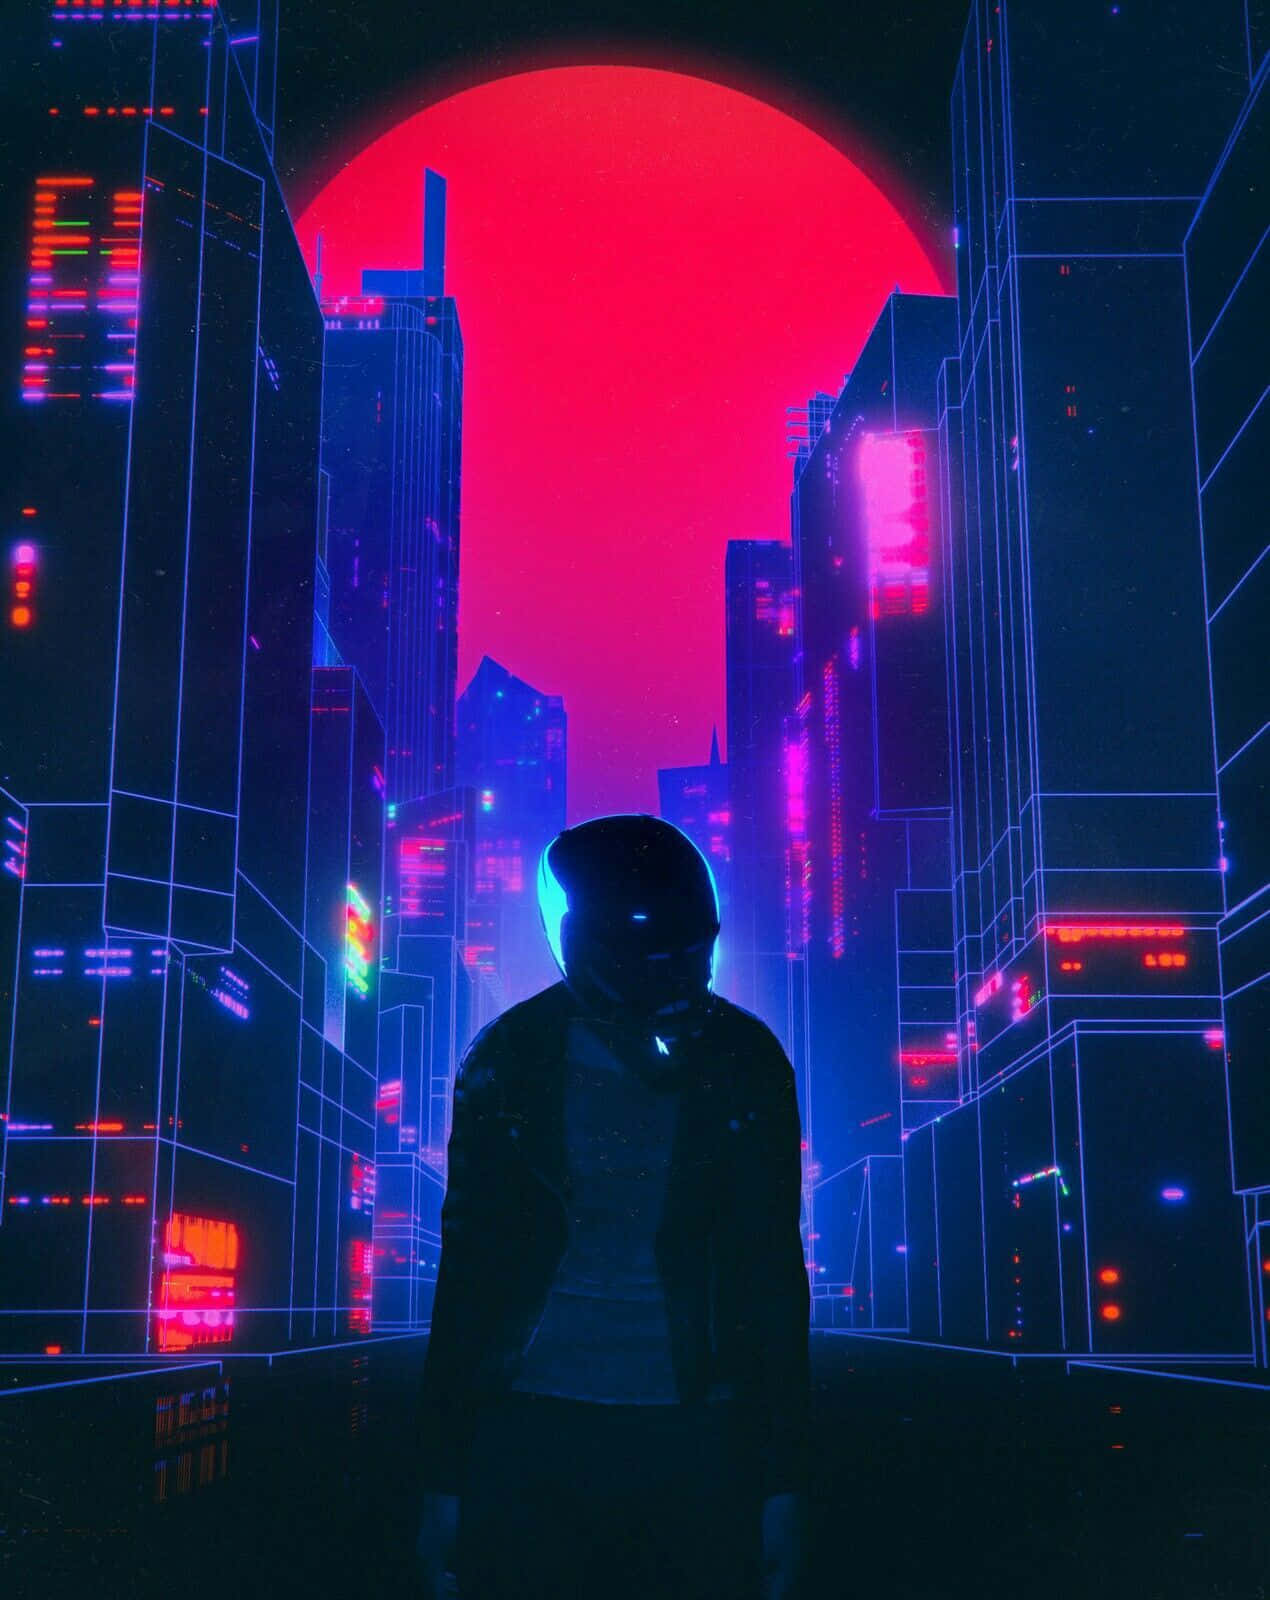 Cyberpunk Cityscapewith Figure.jpg Background